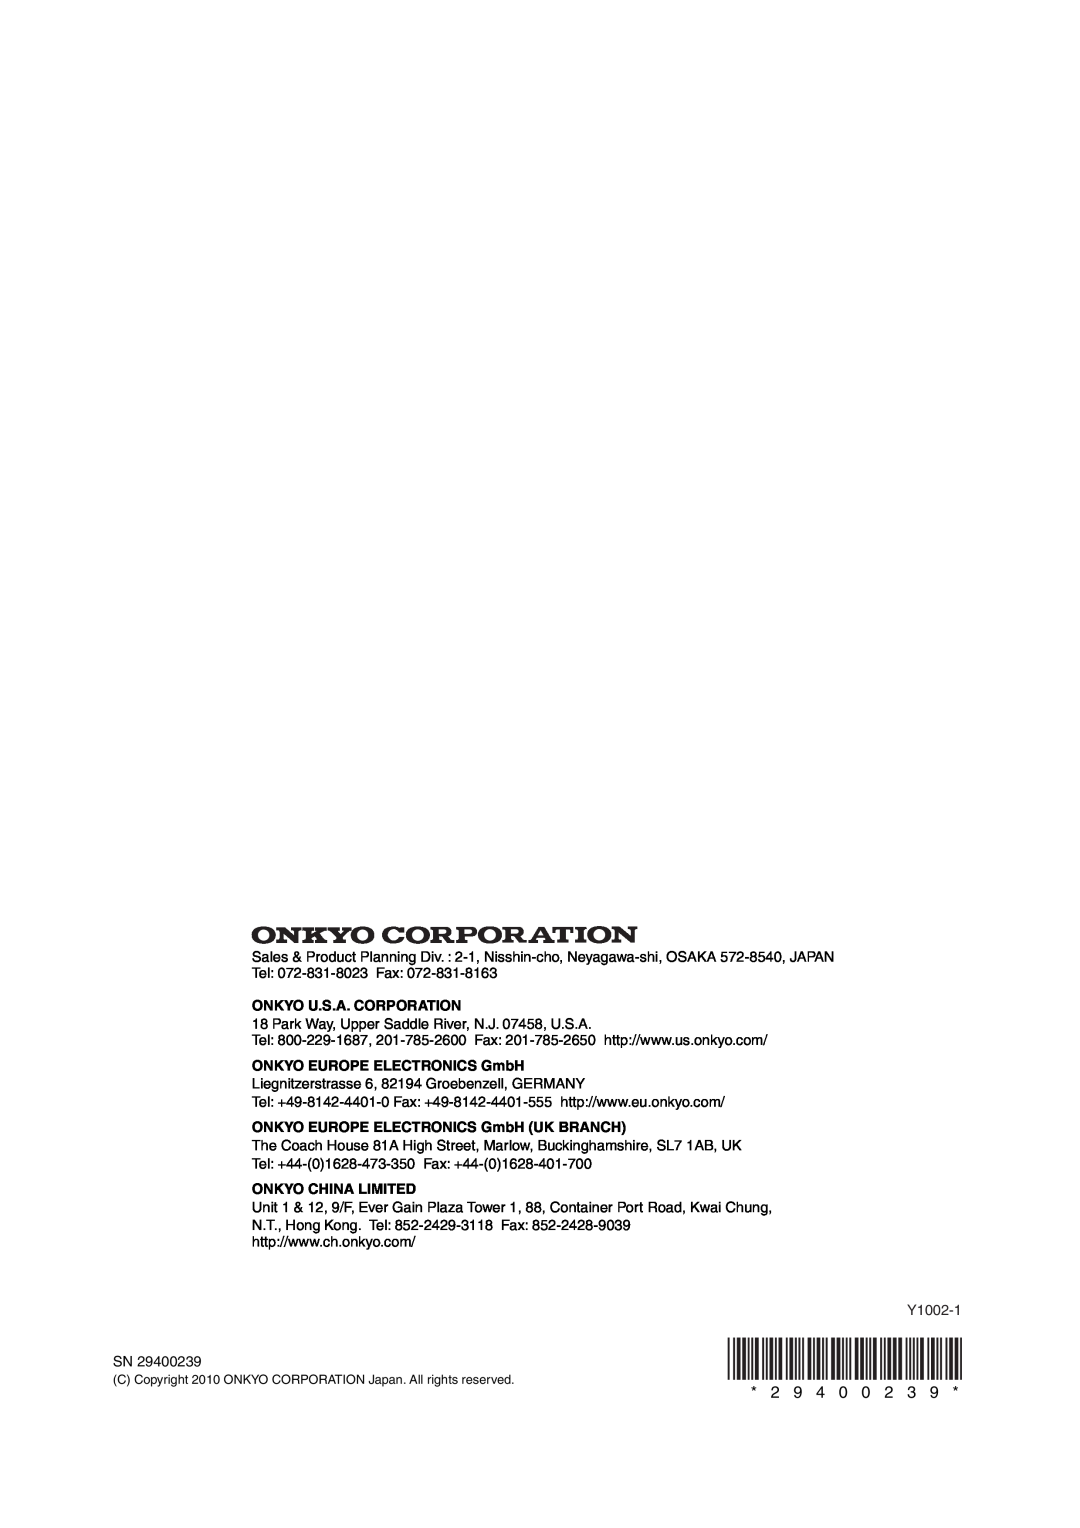 Onkyo SR608 instruction manual 2 9 4 0 0 2 3, Onkyo U.S.A. Corporation, ONKYO EUROPE ELECTRONICS GmbH, Onkyo China Limited 